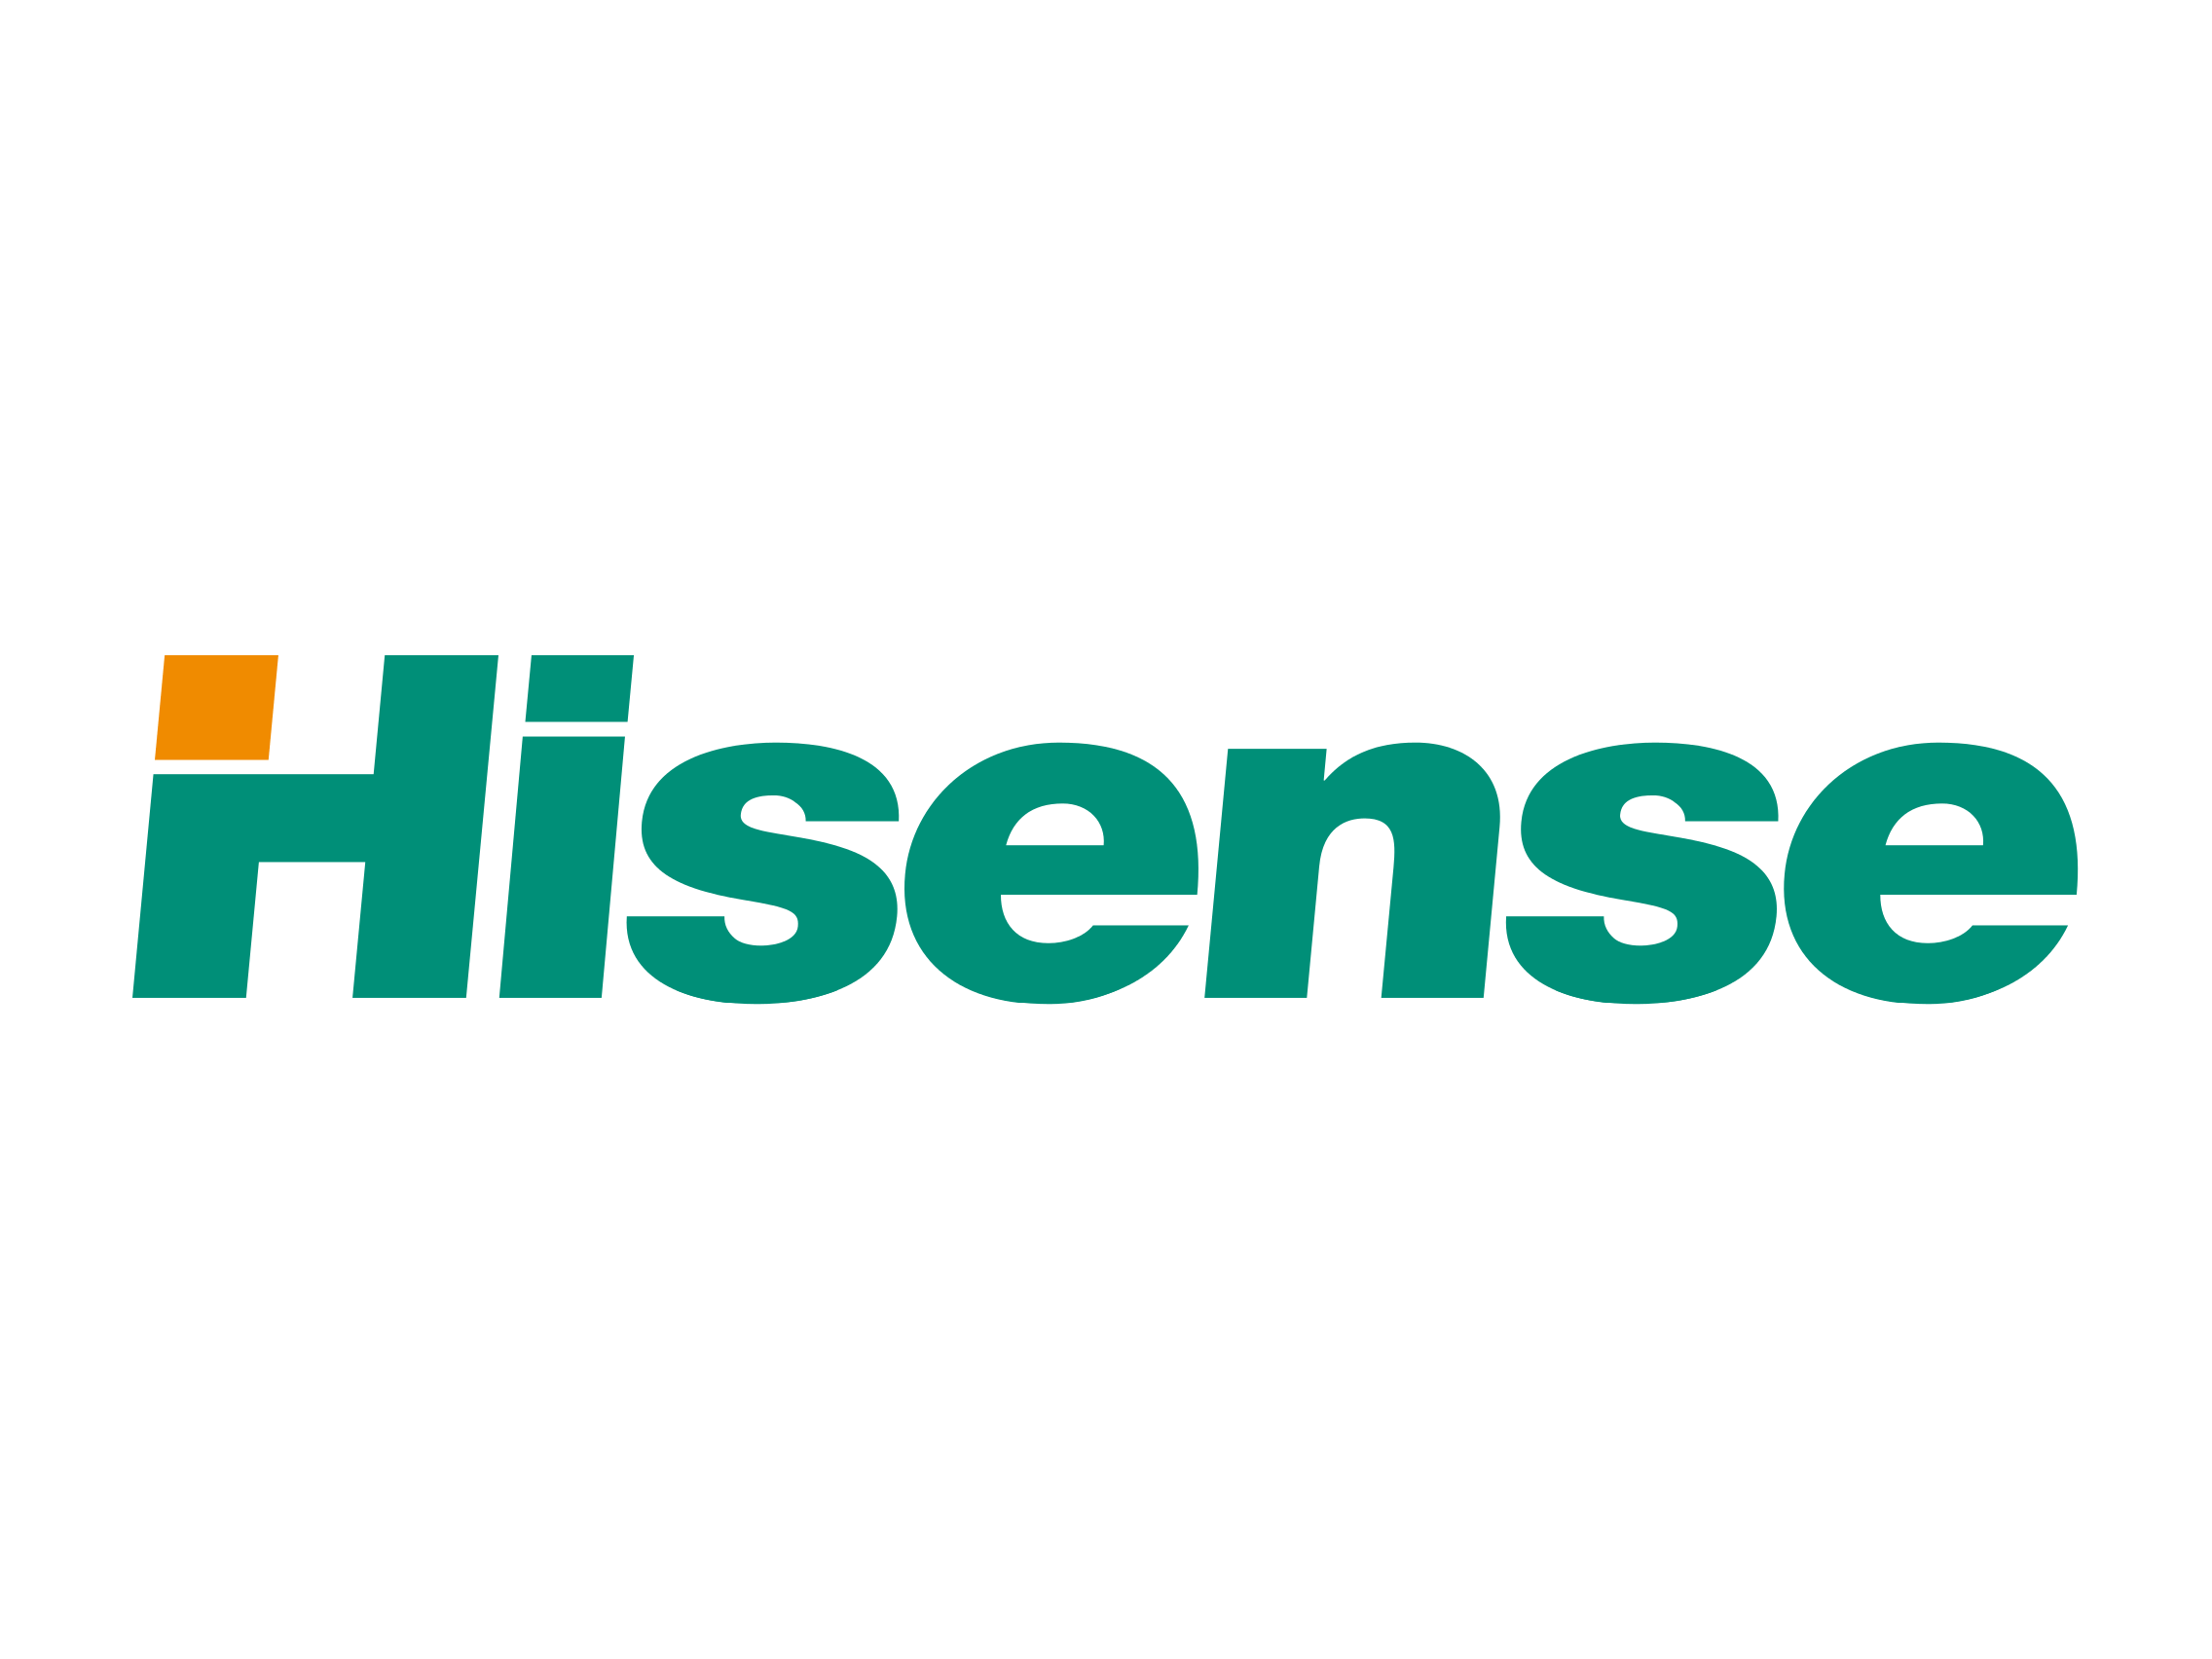 Hisense Logo - Hisense logo | Logok